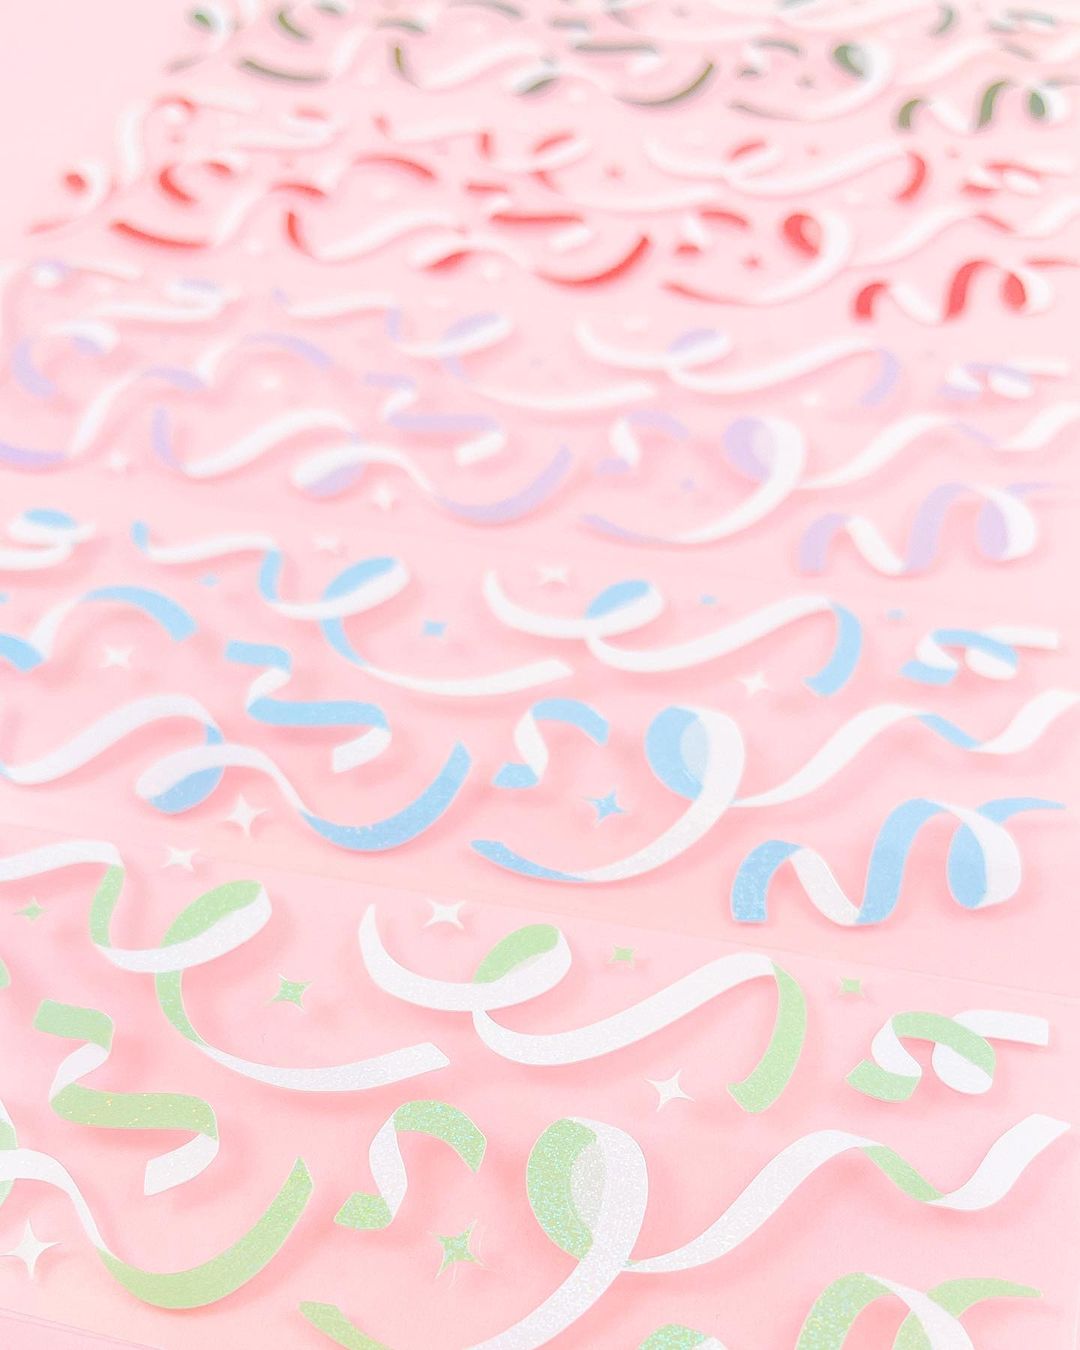 [borahstudio] Two-Toned Confetti (6 colors)